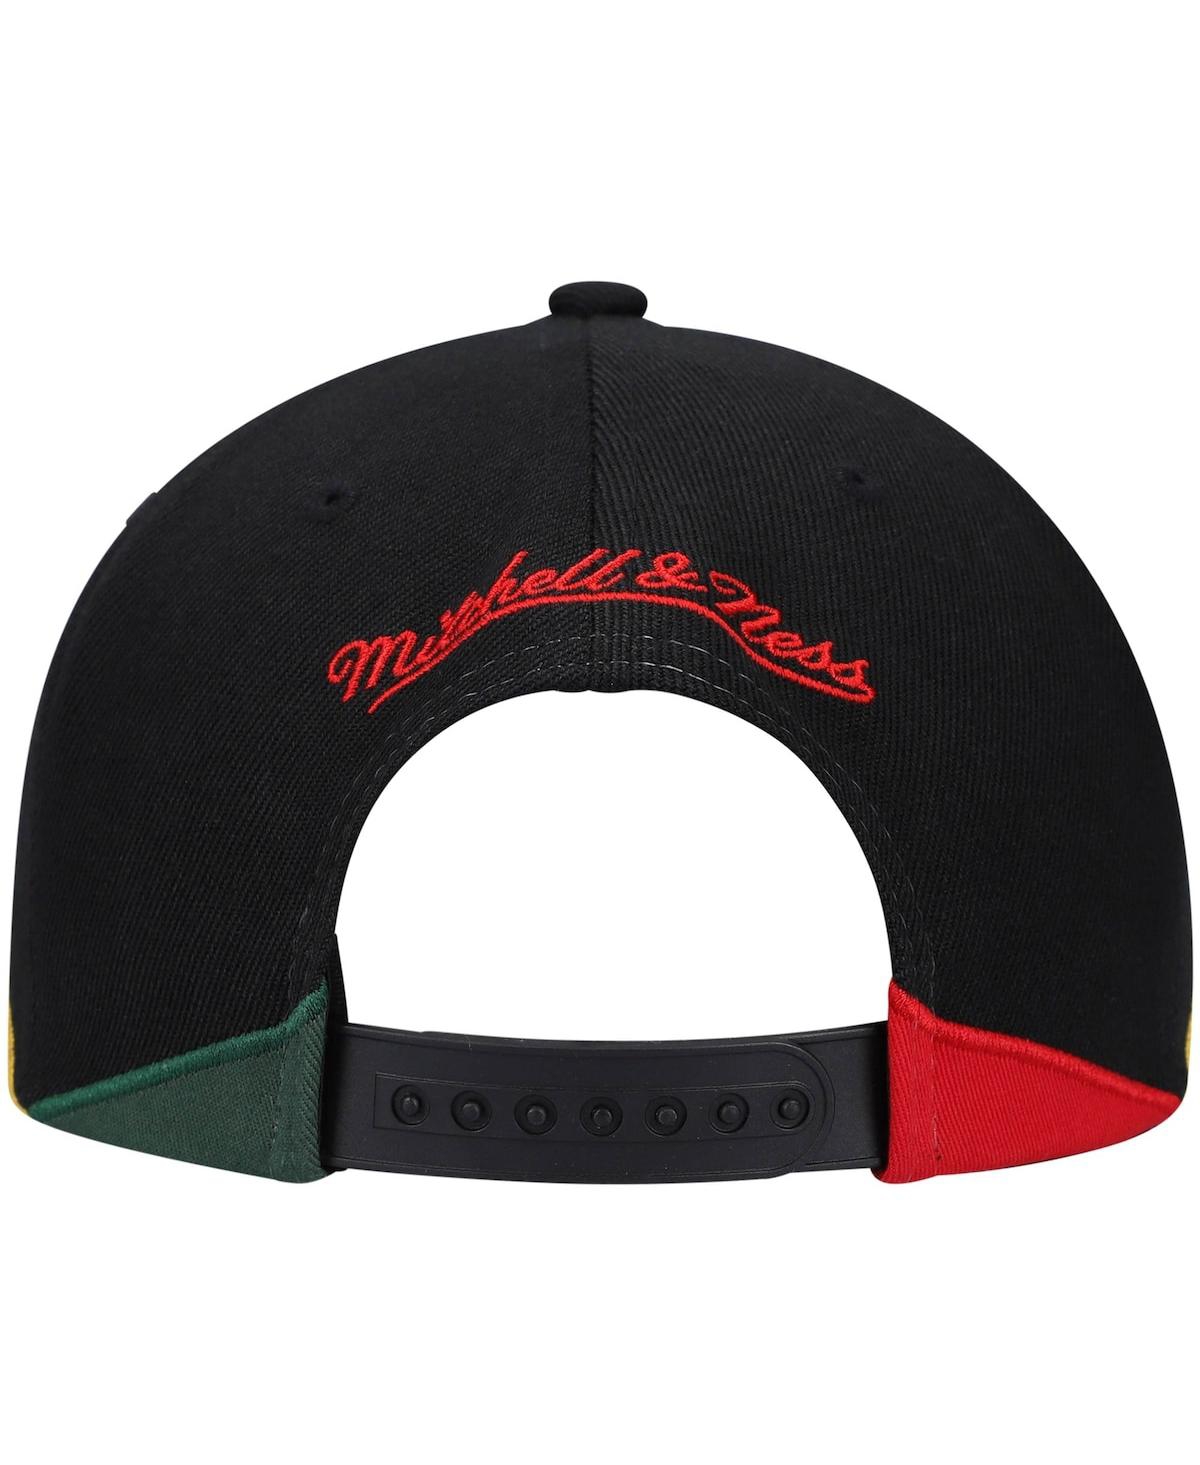 Shop Mitchell & Ness Men's  Black Philadelphia 76ers Black History Month Snapback Hat